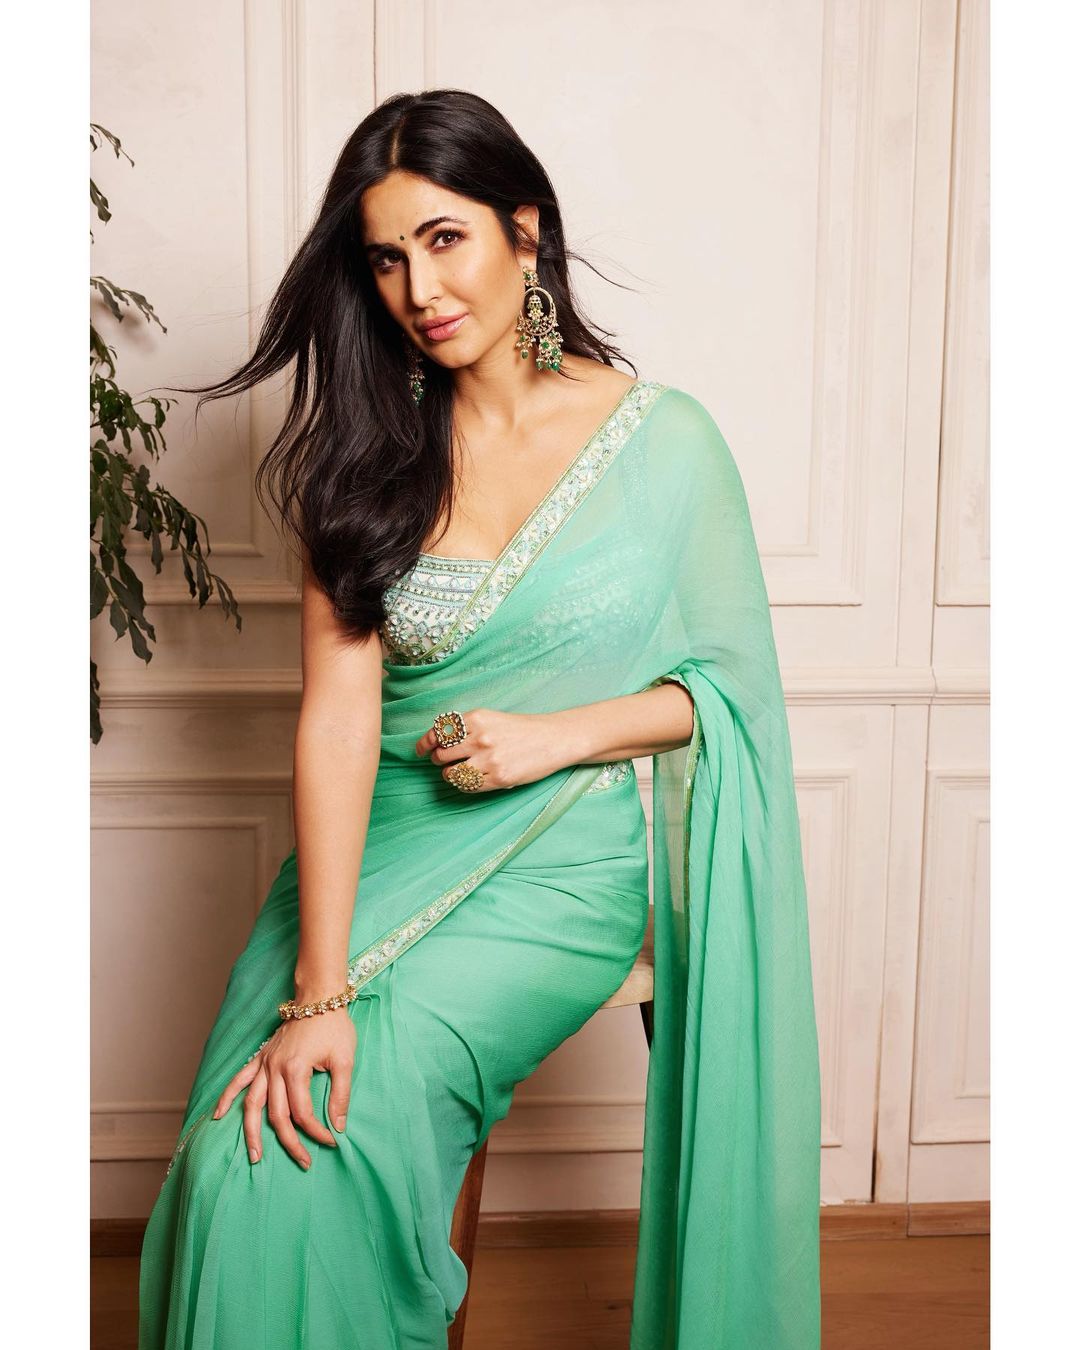 Take a look at Katrina Kaif's saree collection 4065